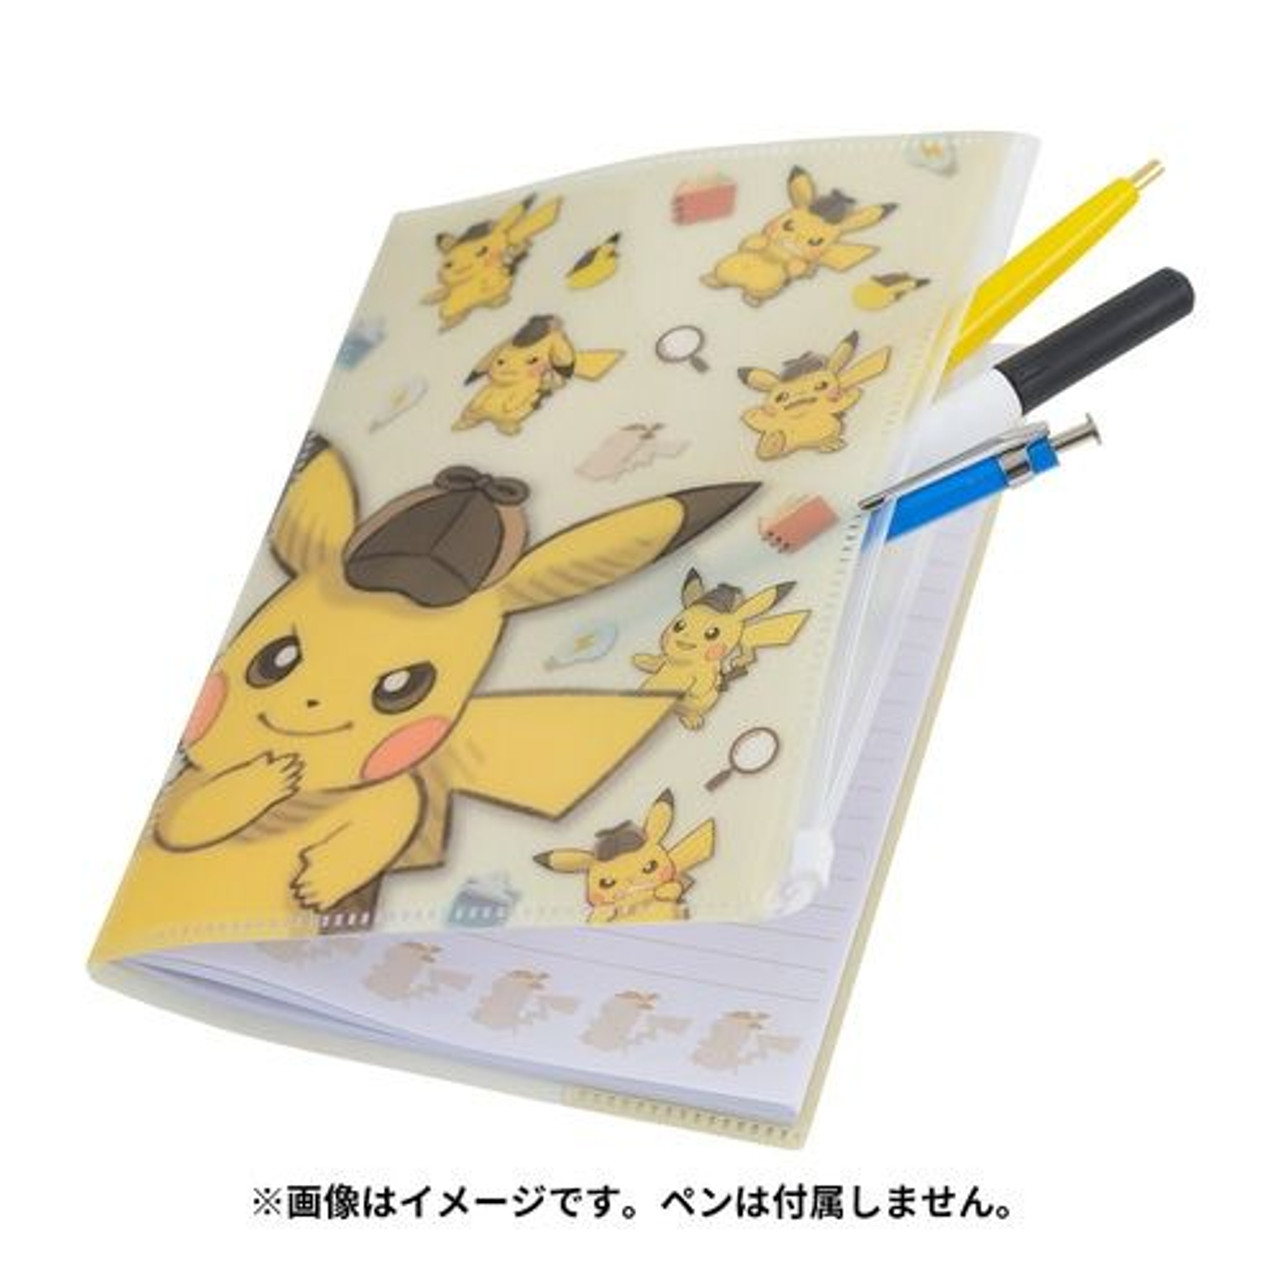 Detective Pikachu Pencil Bag 